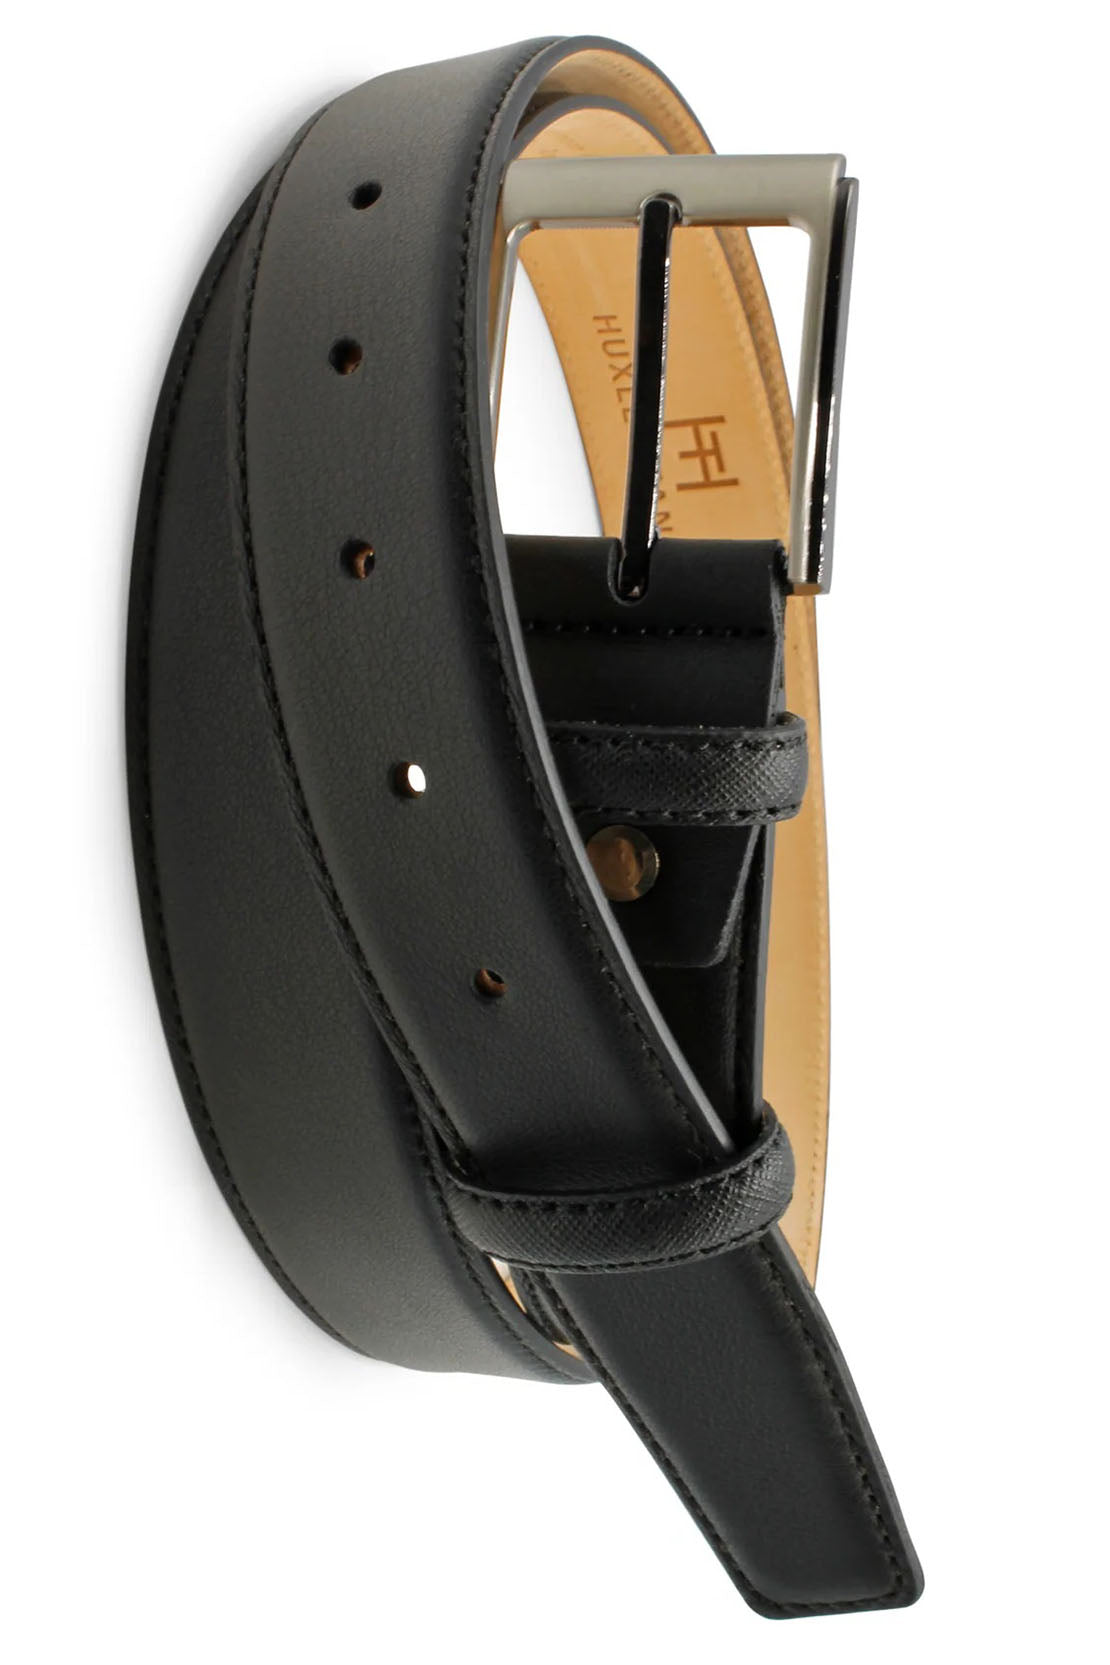 HUXLEY TANNER - BALLESTEROS 35mm Napa Leather Belt in Black BAL001